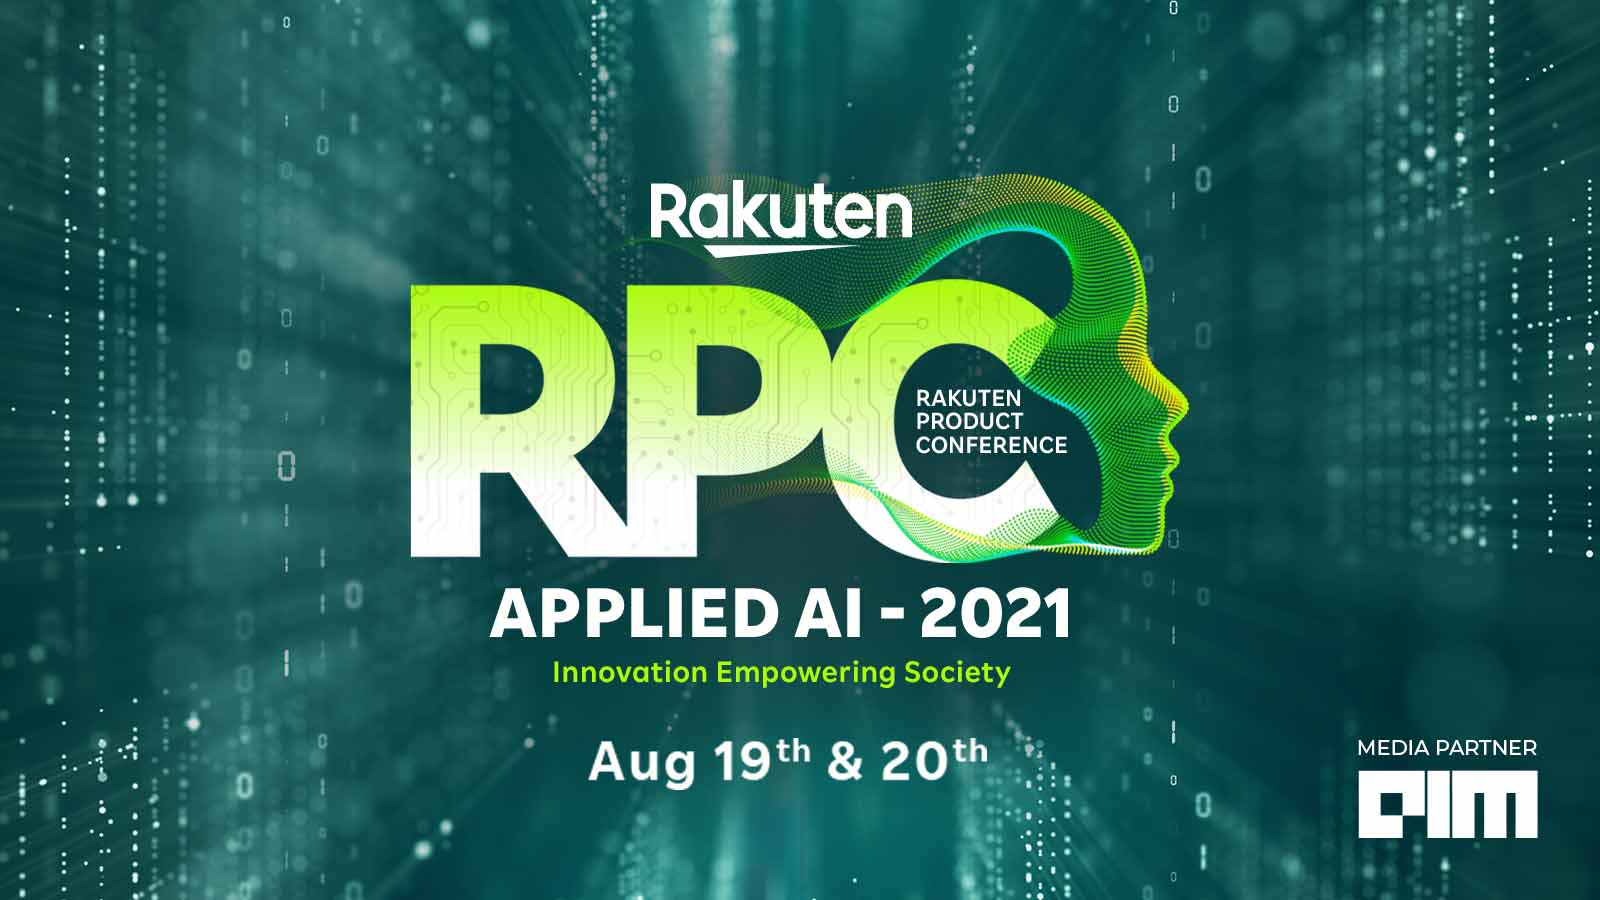 Rakuten India Announces Applied AI Conference 2021: A Virtual AI Conference